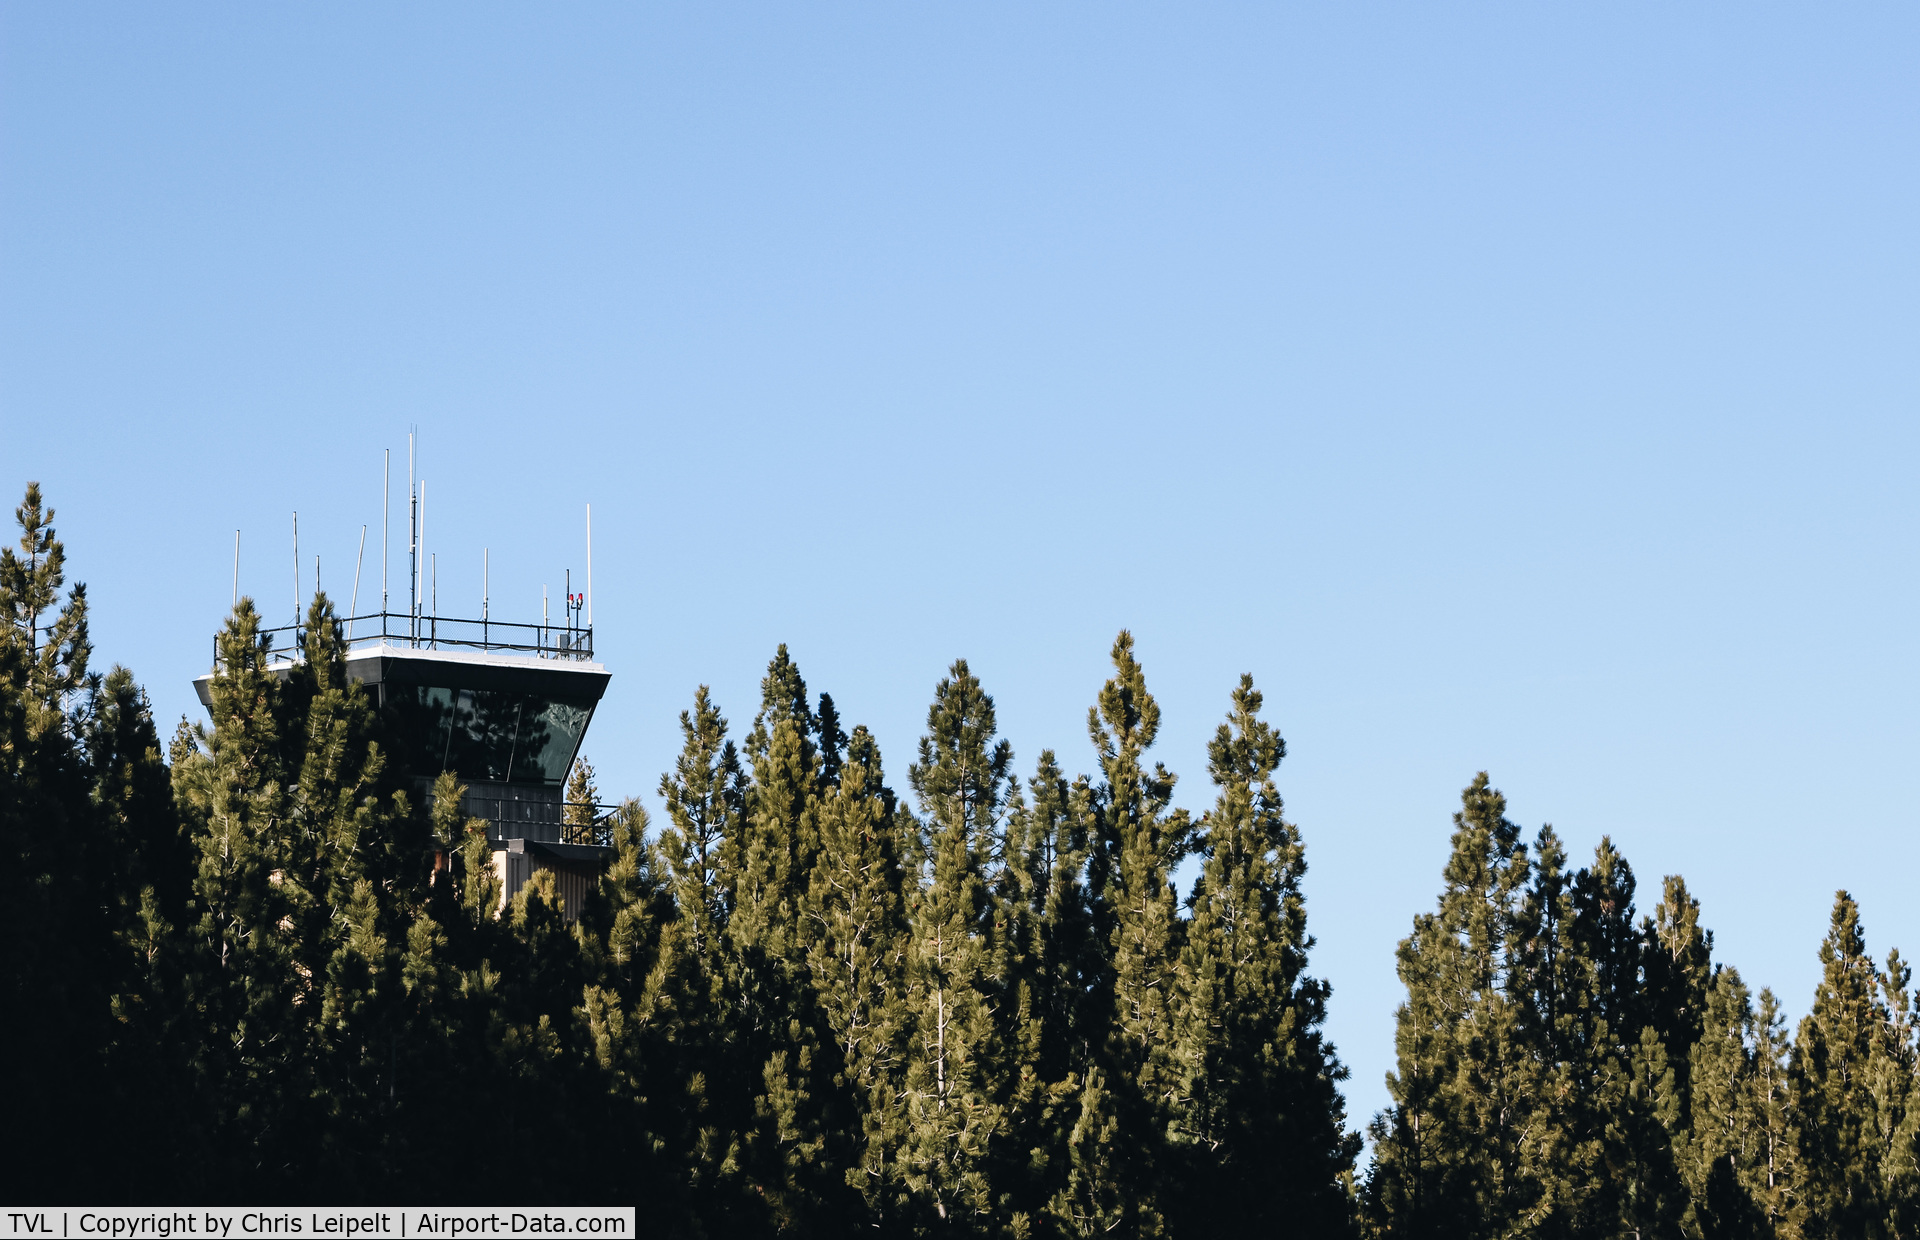 Lake Tahoe Airport (TVL) - The control tower at South Lake Tahoe Airport, CA.